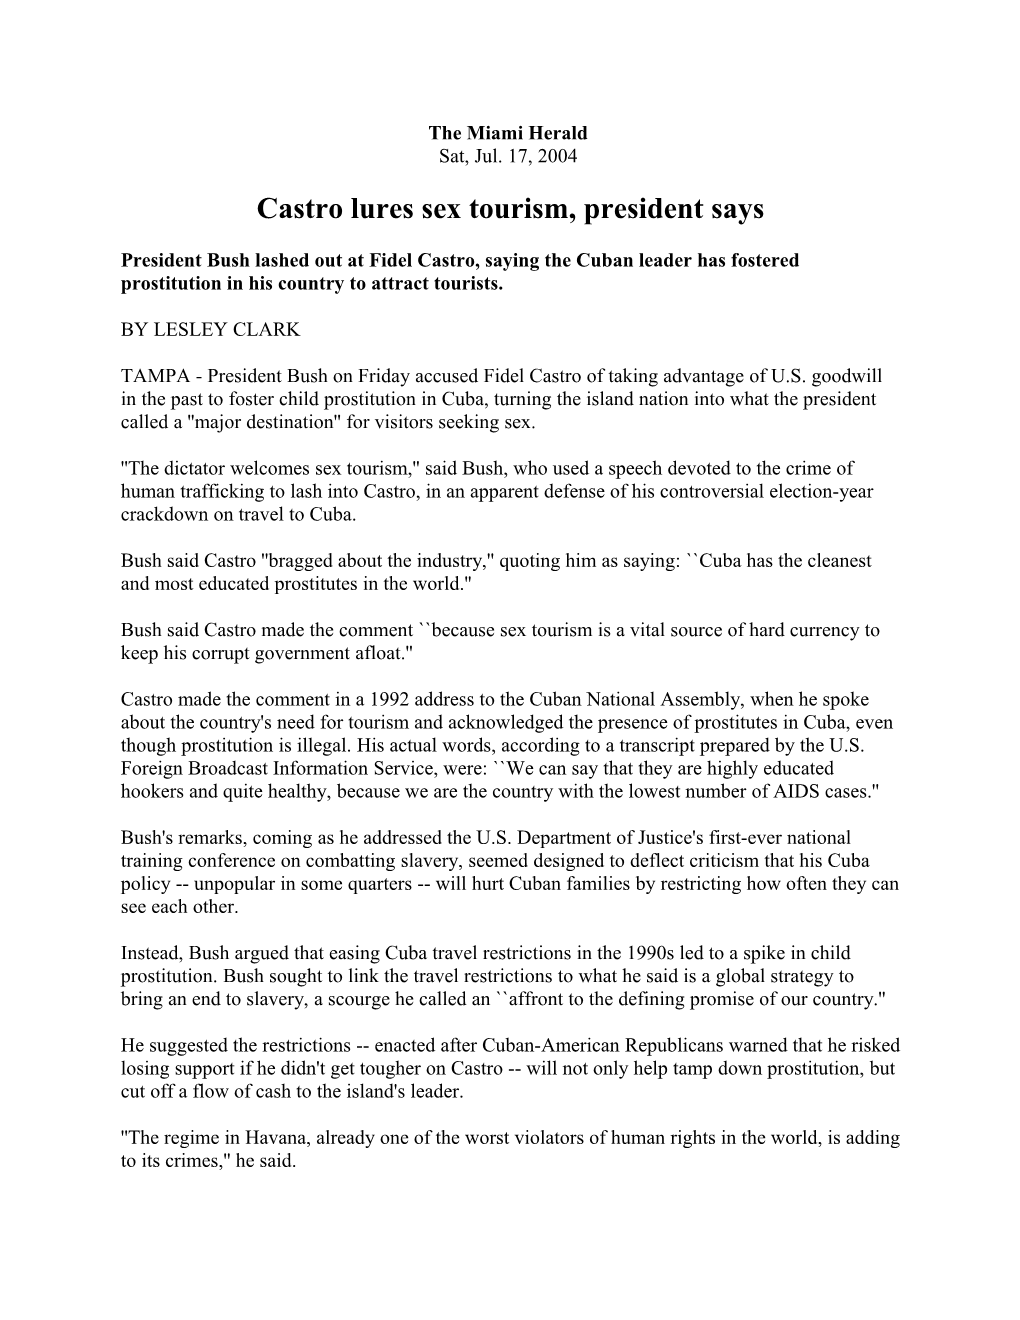 Castro Lures Sex Tourism, President Says